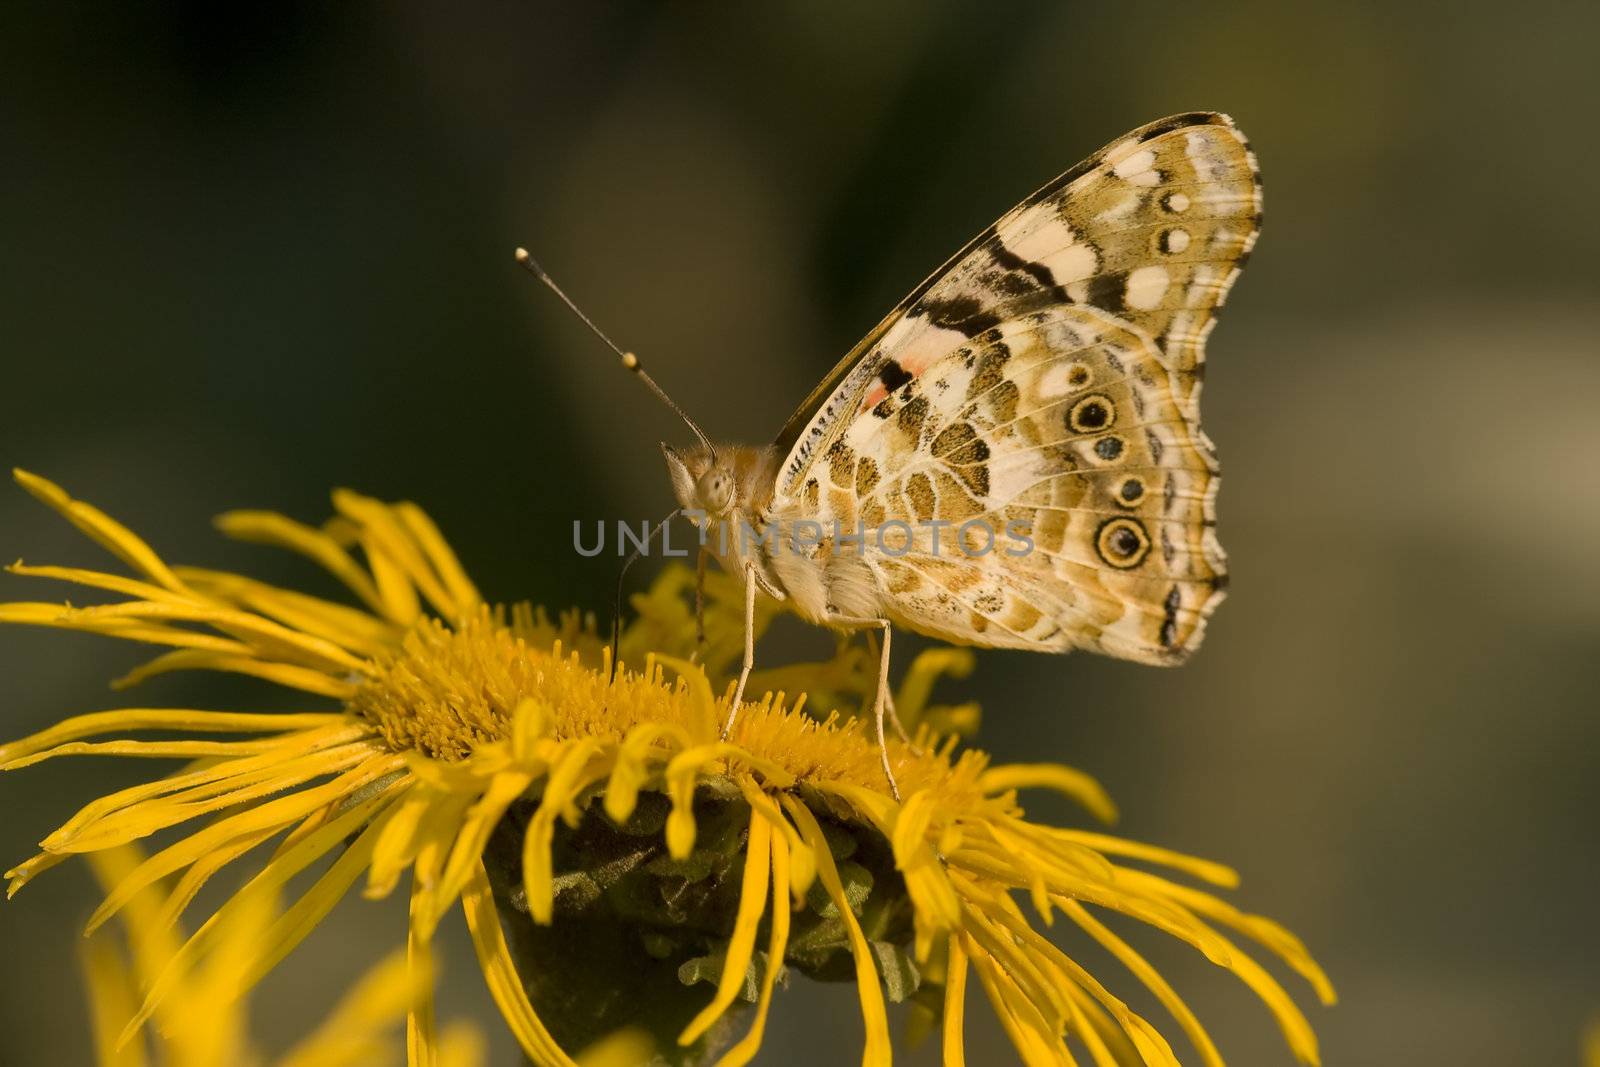 Butterfly Feeding On Yellow Flower by MihaiDancaescu